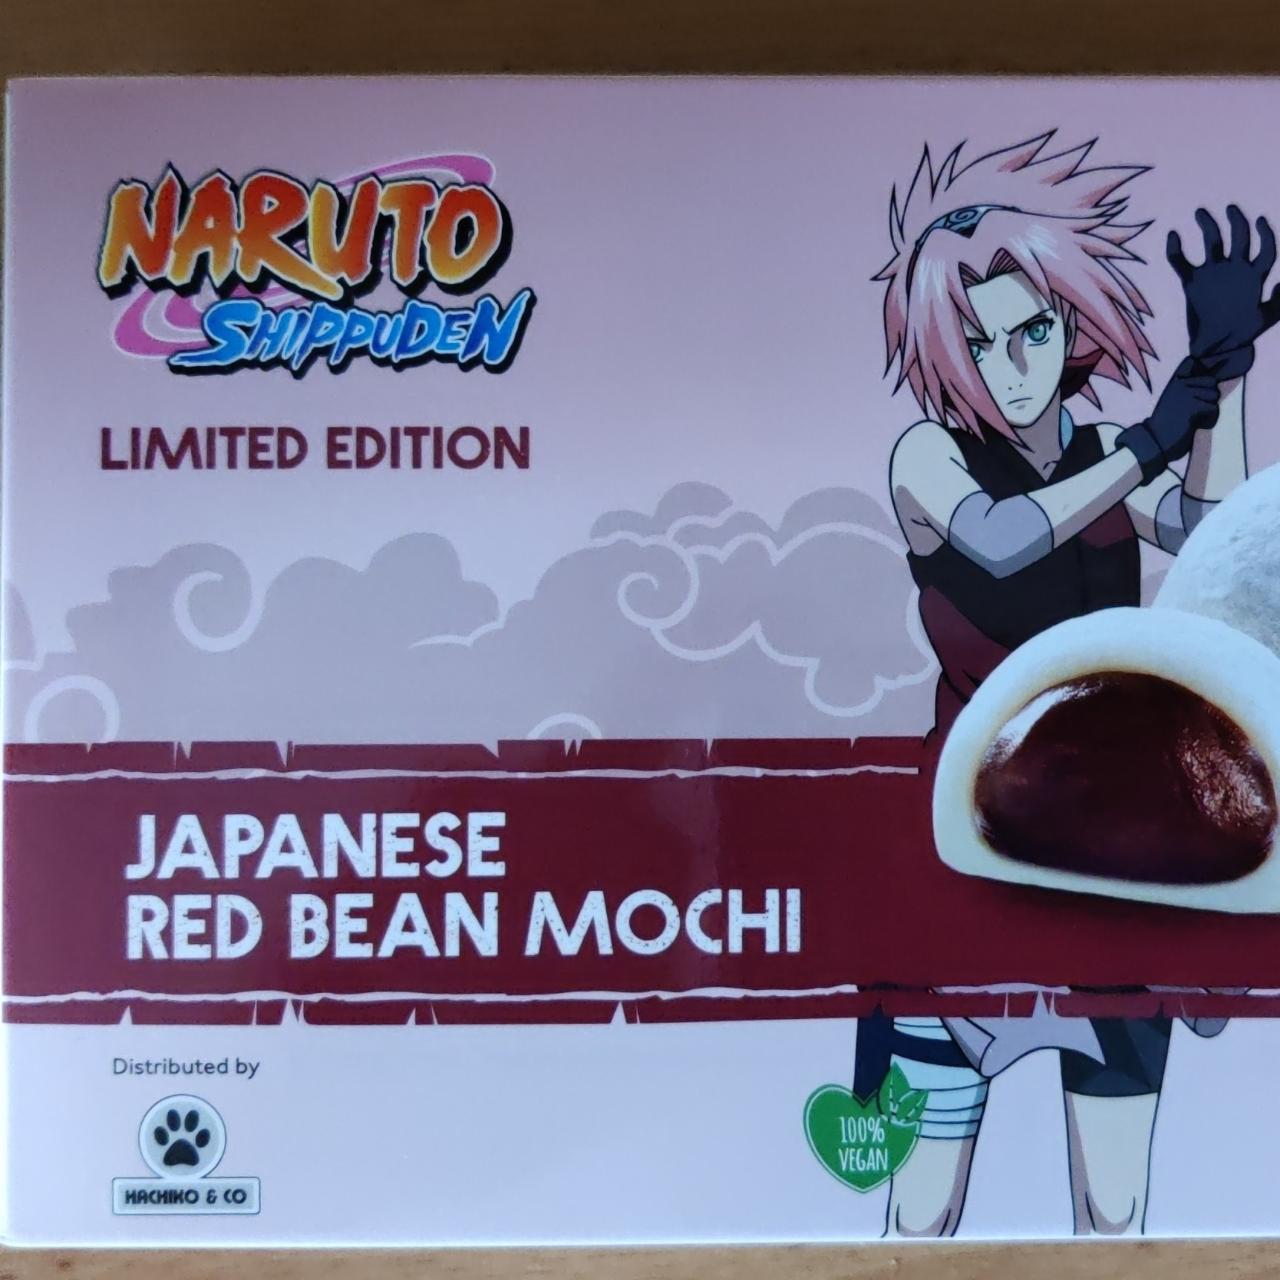 Fotografie - Naruto Shippuden Japanese Red Bean Mochi